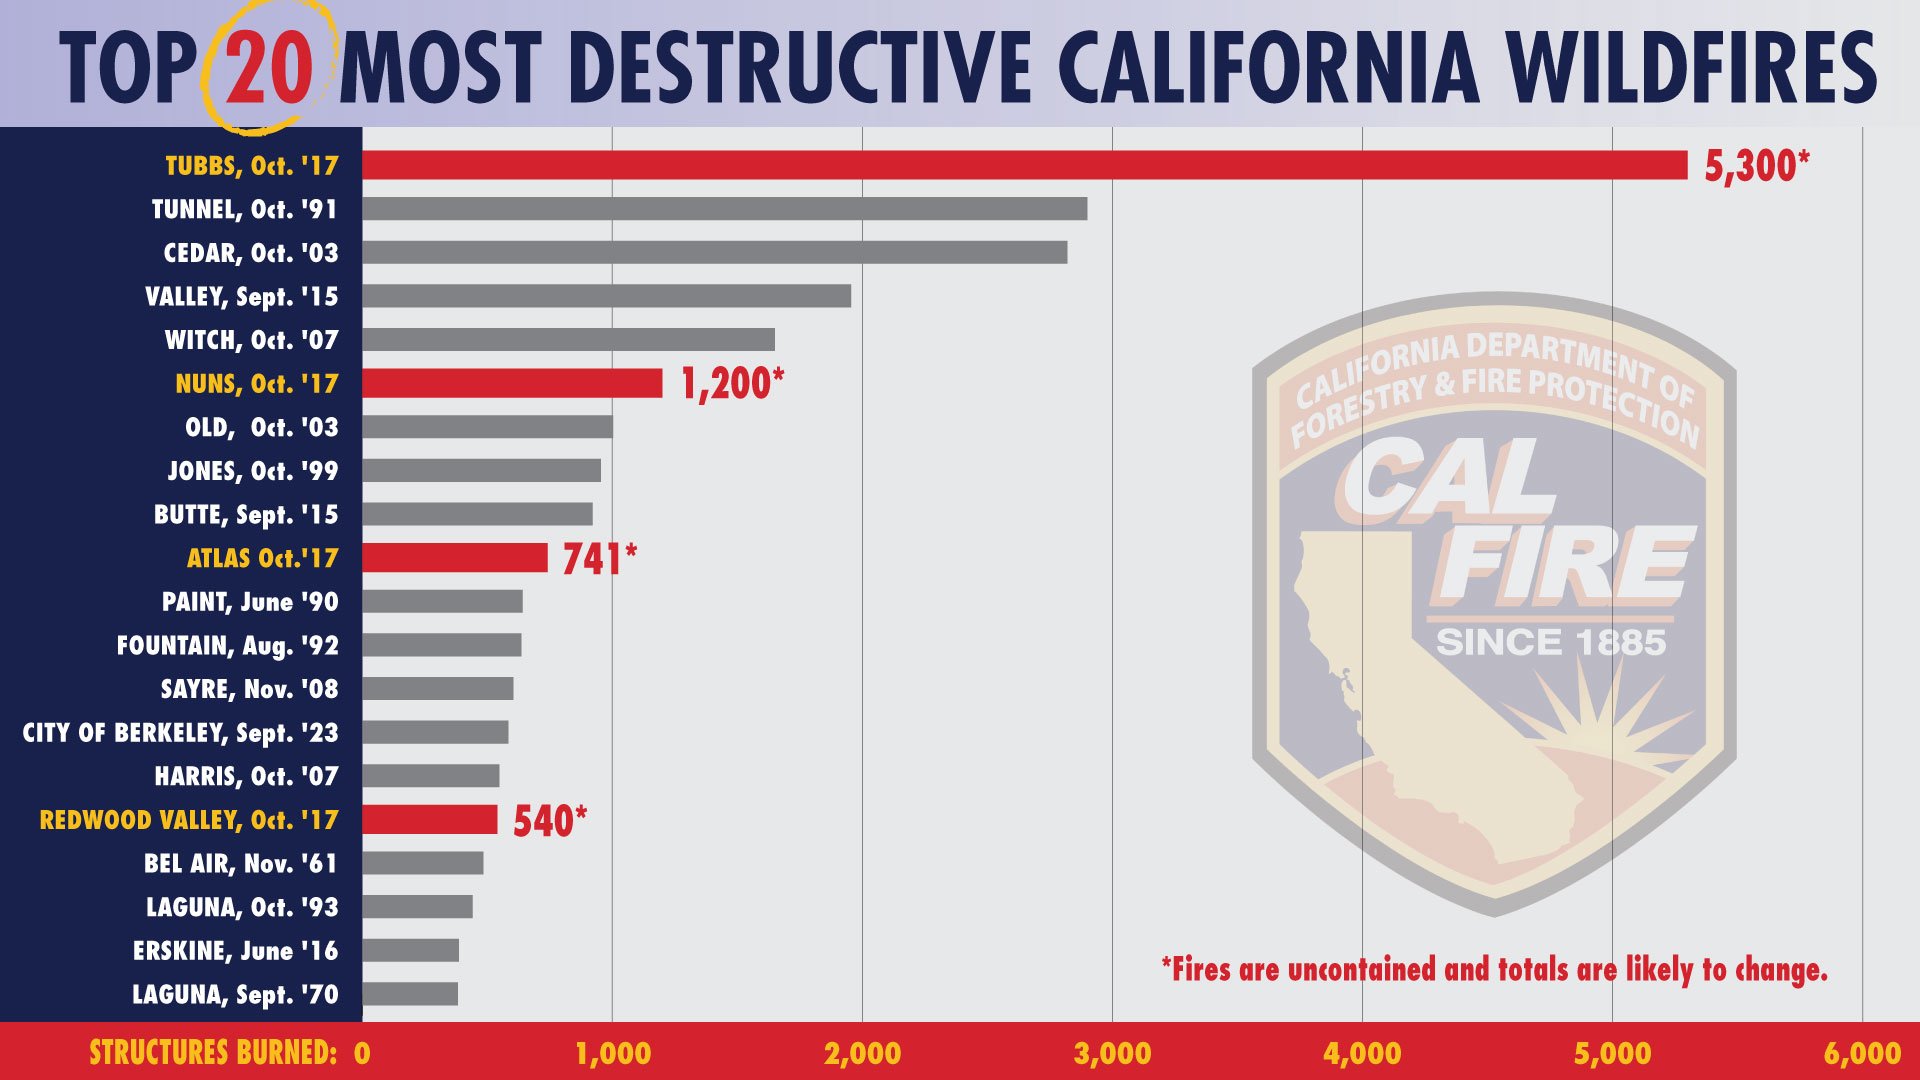 The 20 most destructive fires